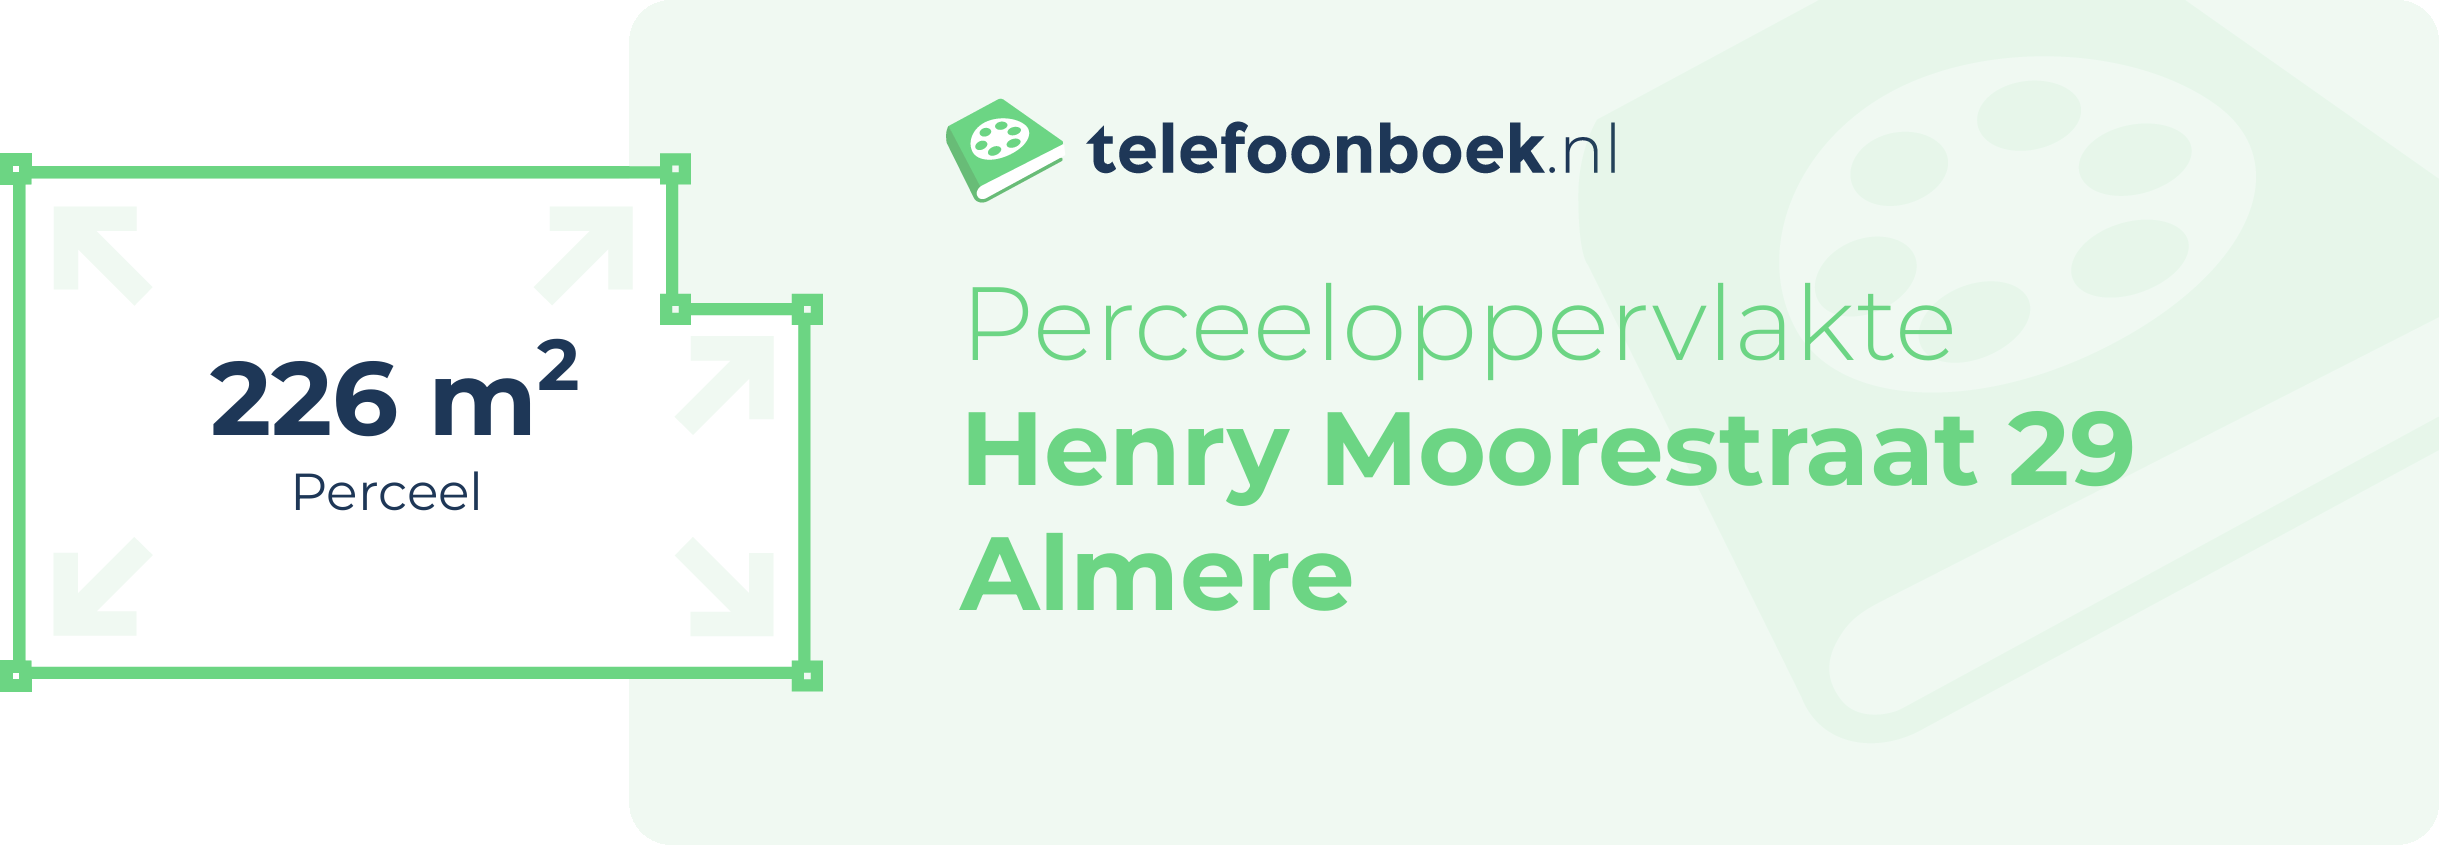 Perceeloppervlakte Henry Moorestraat 29 Almere